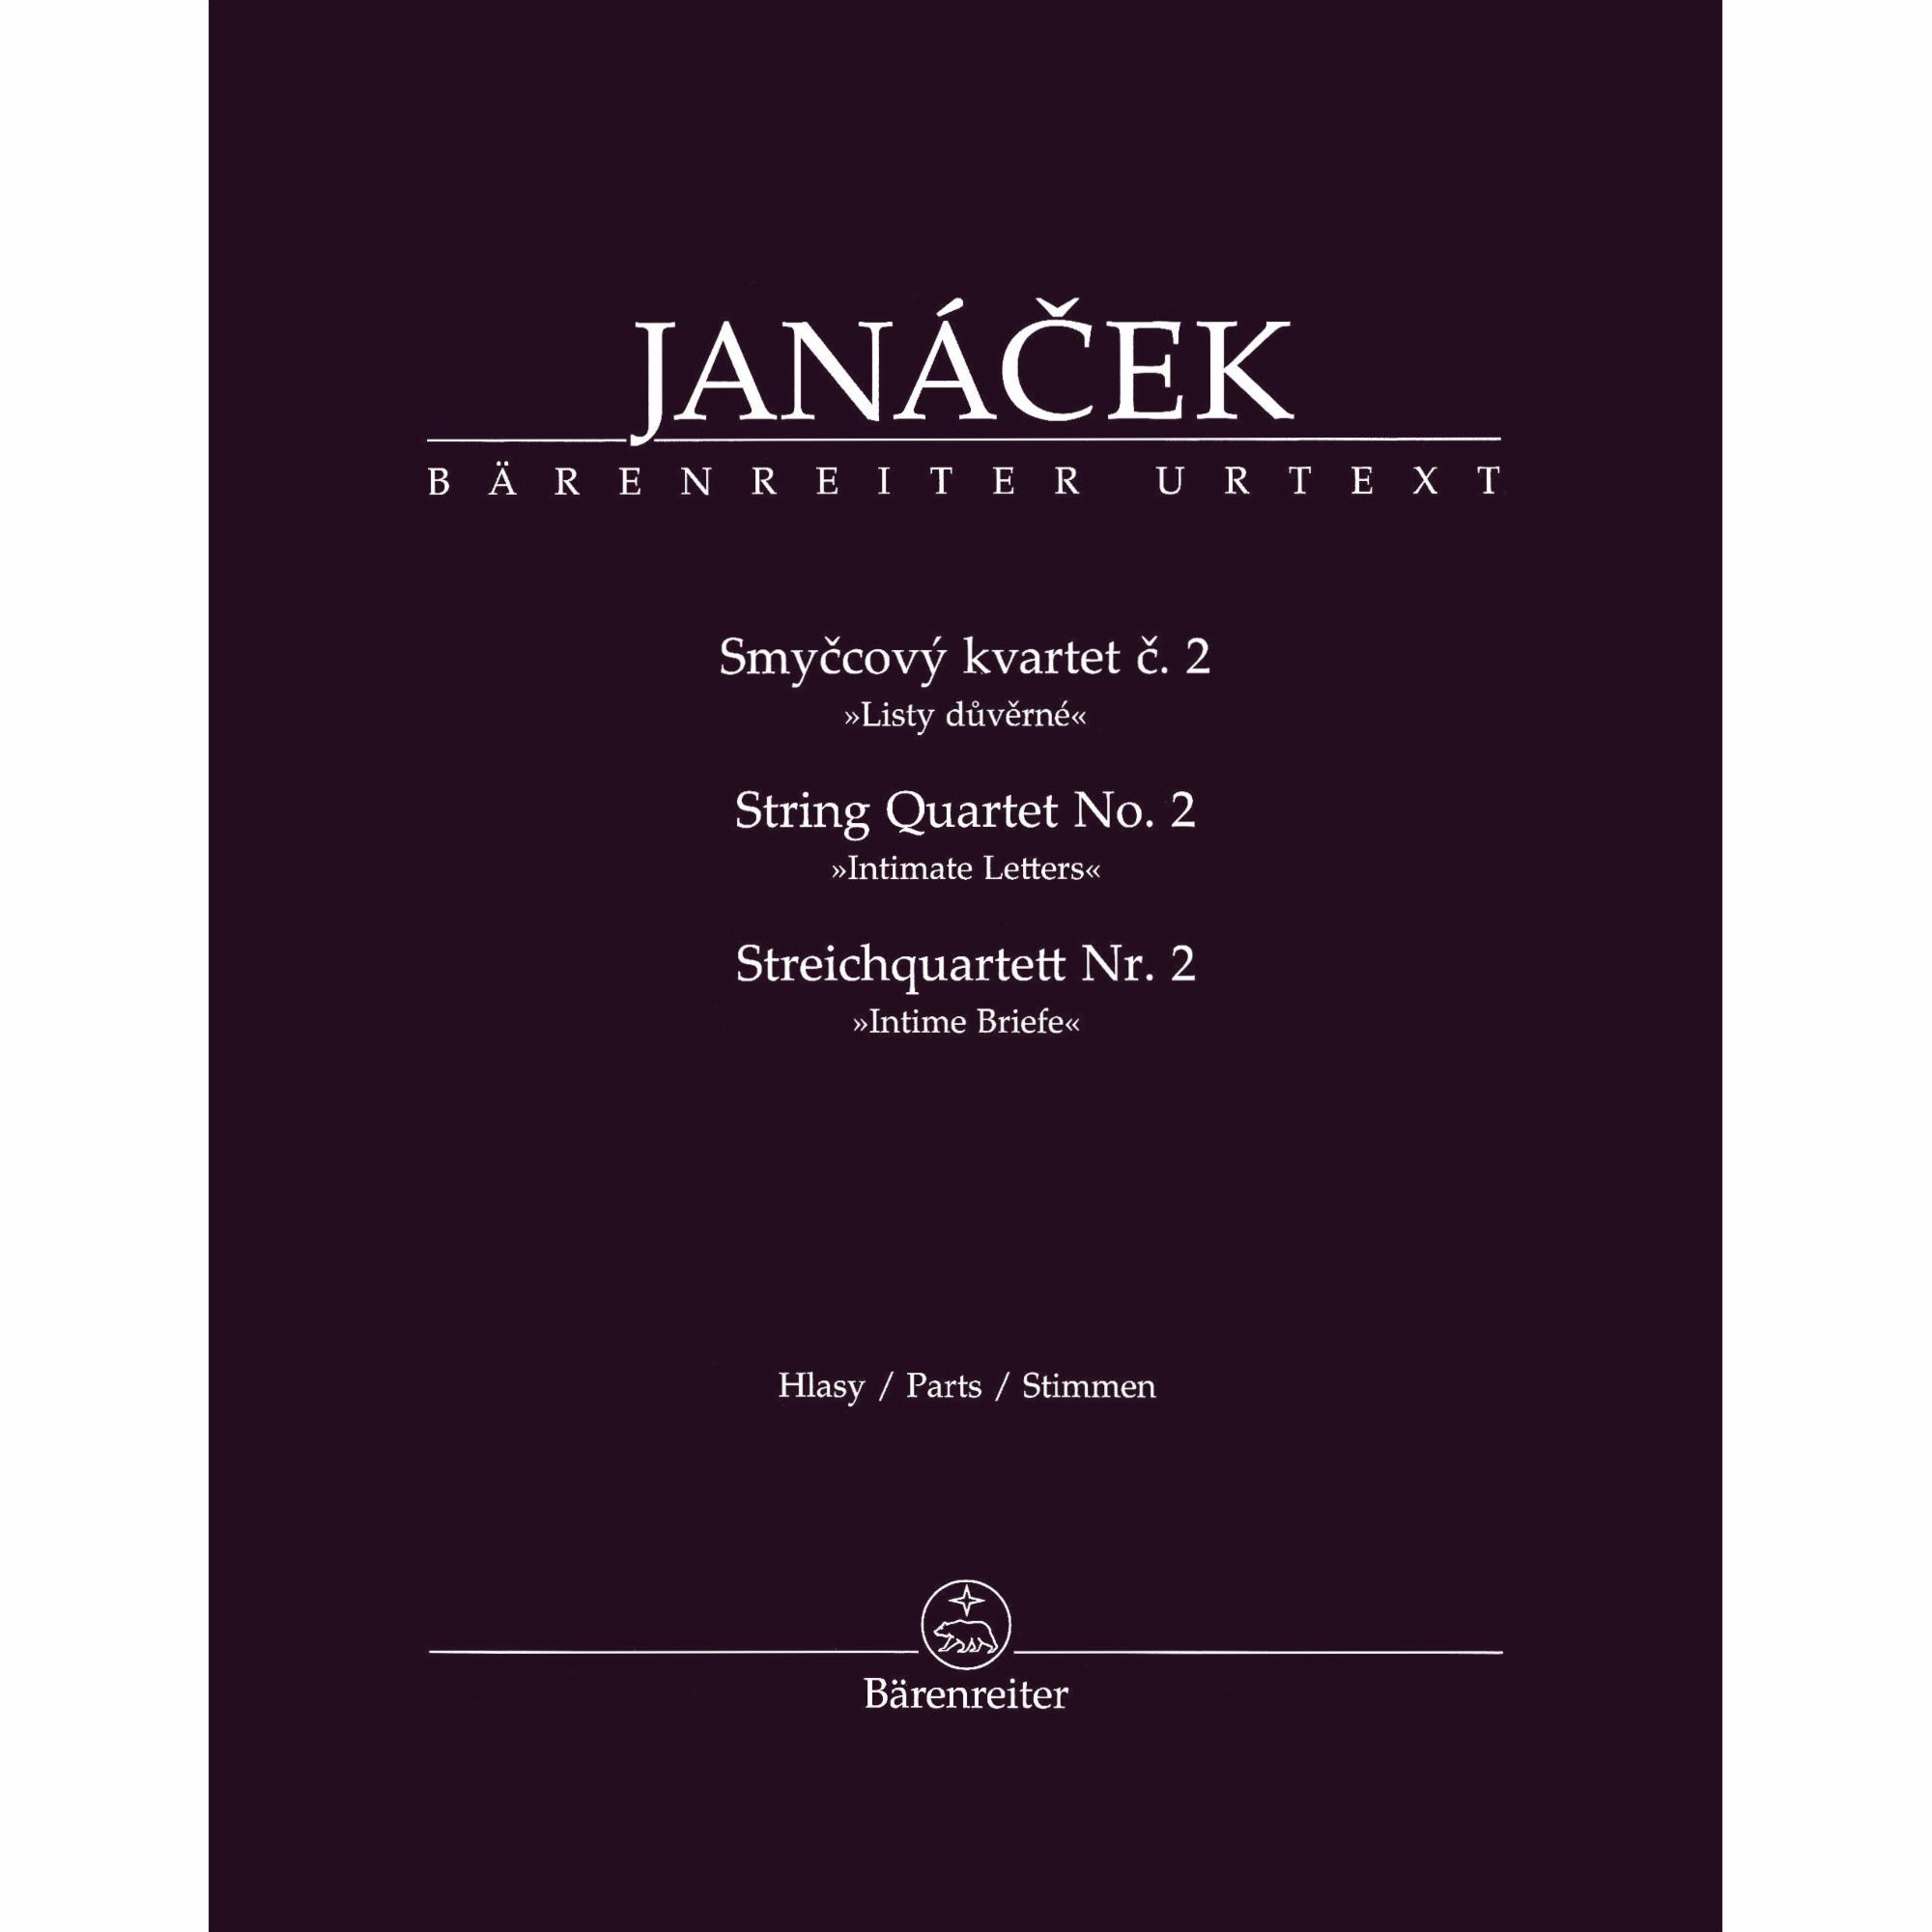 Janacek -- String Quartet No. 2 (Intimate Letters)